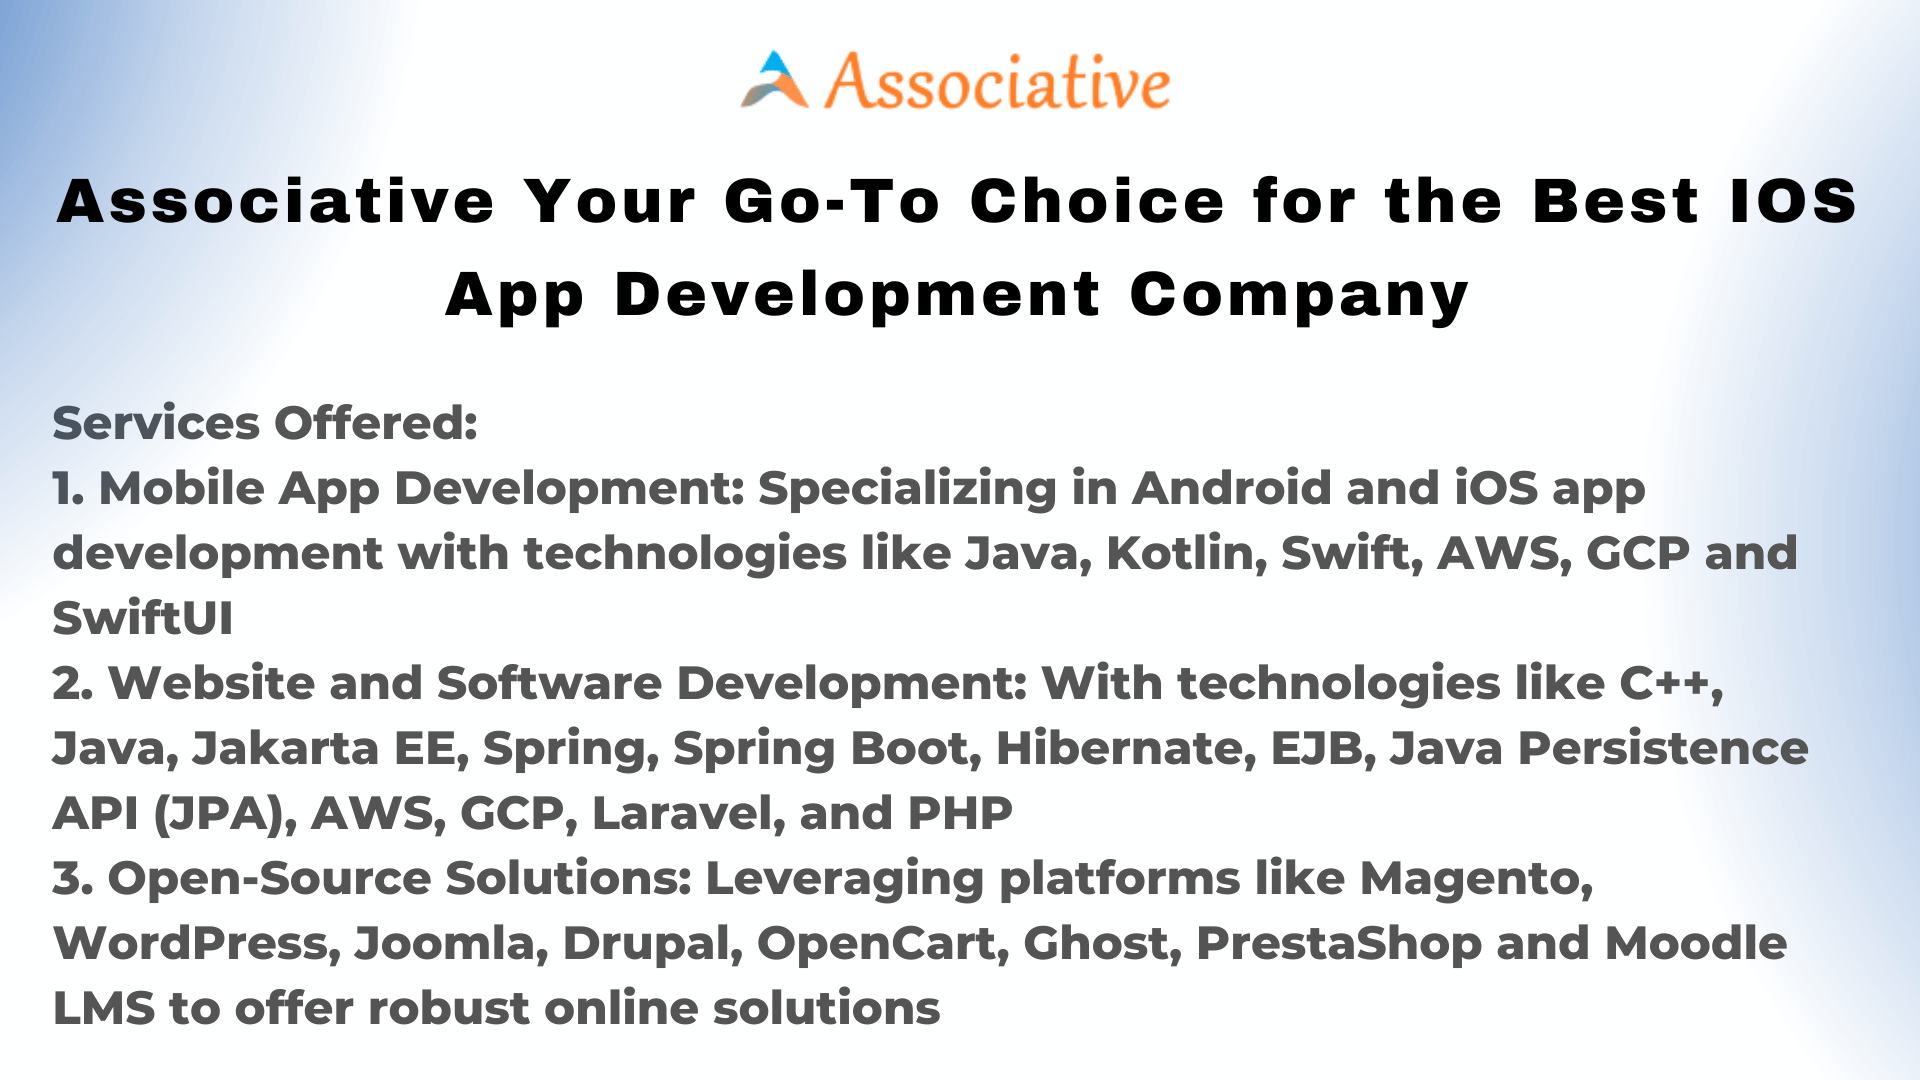 Associative Your Go-To Choice for the Best iOS App Development Company